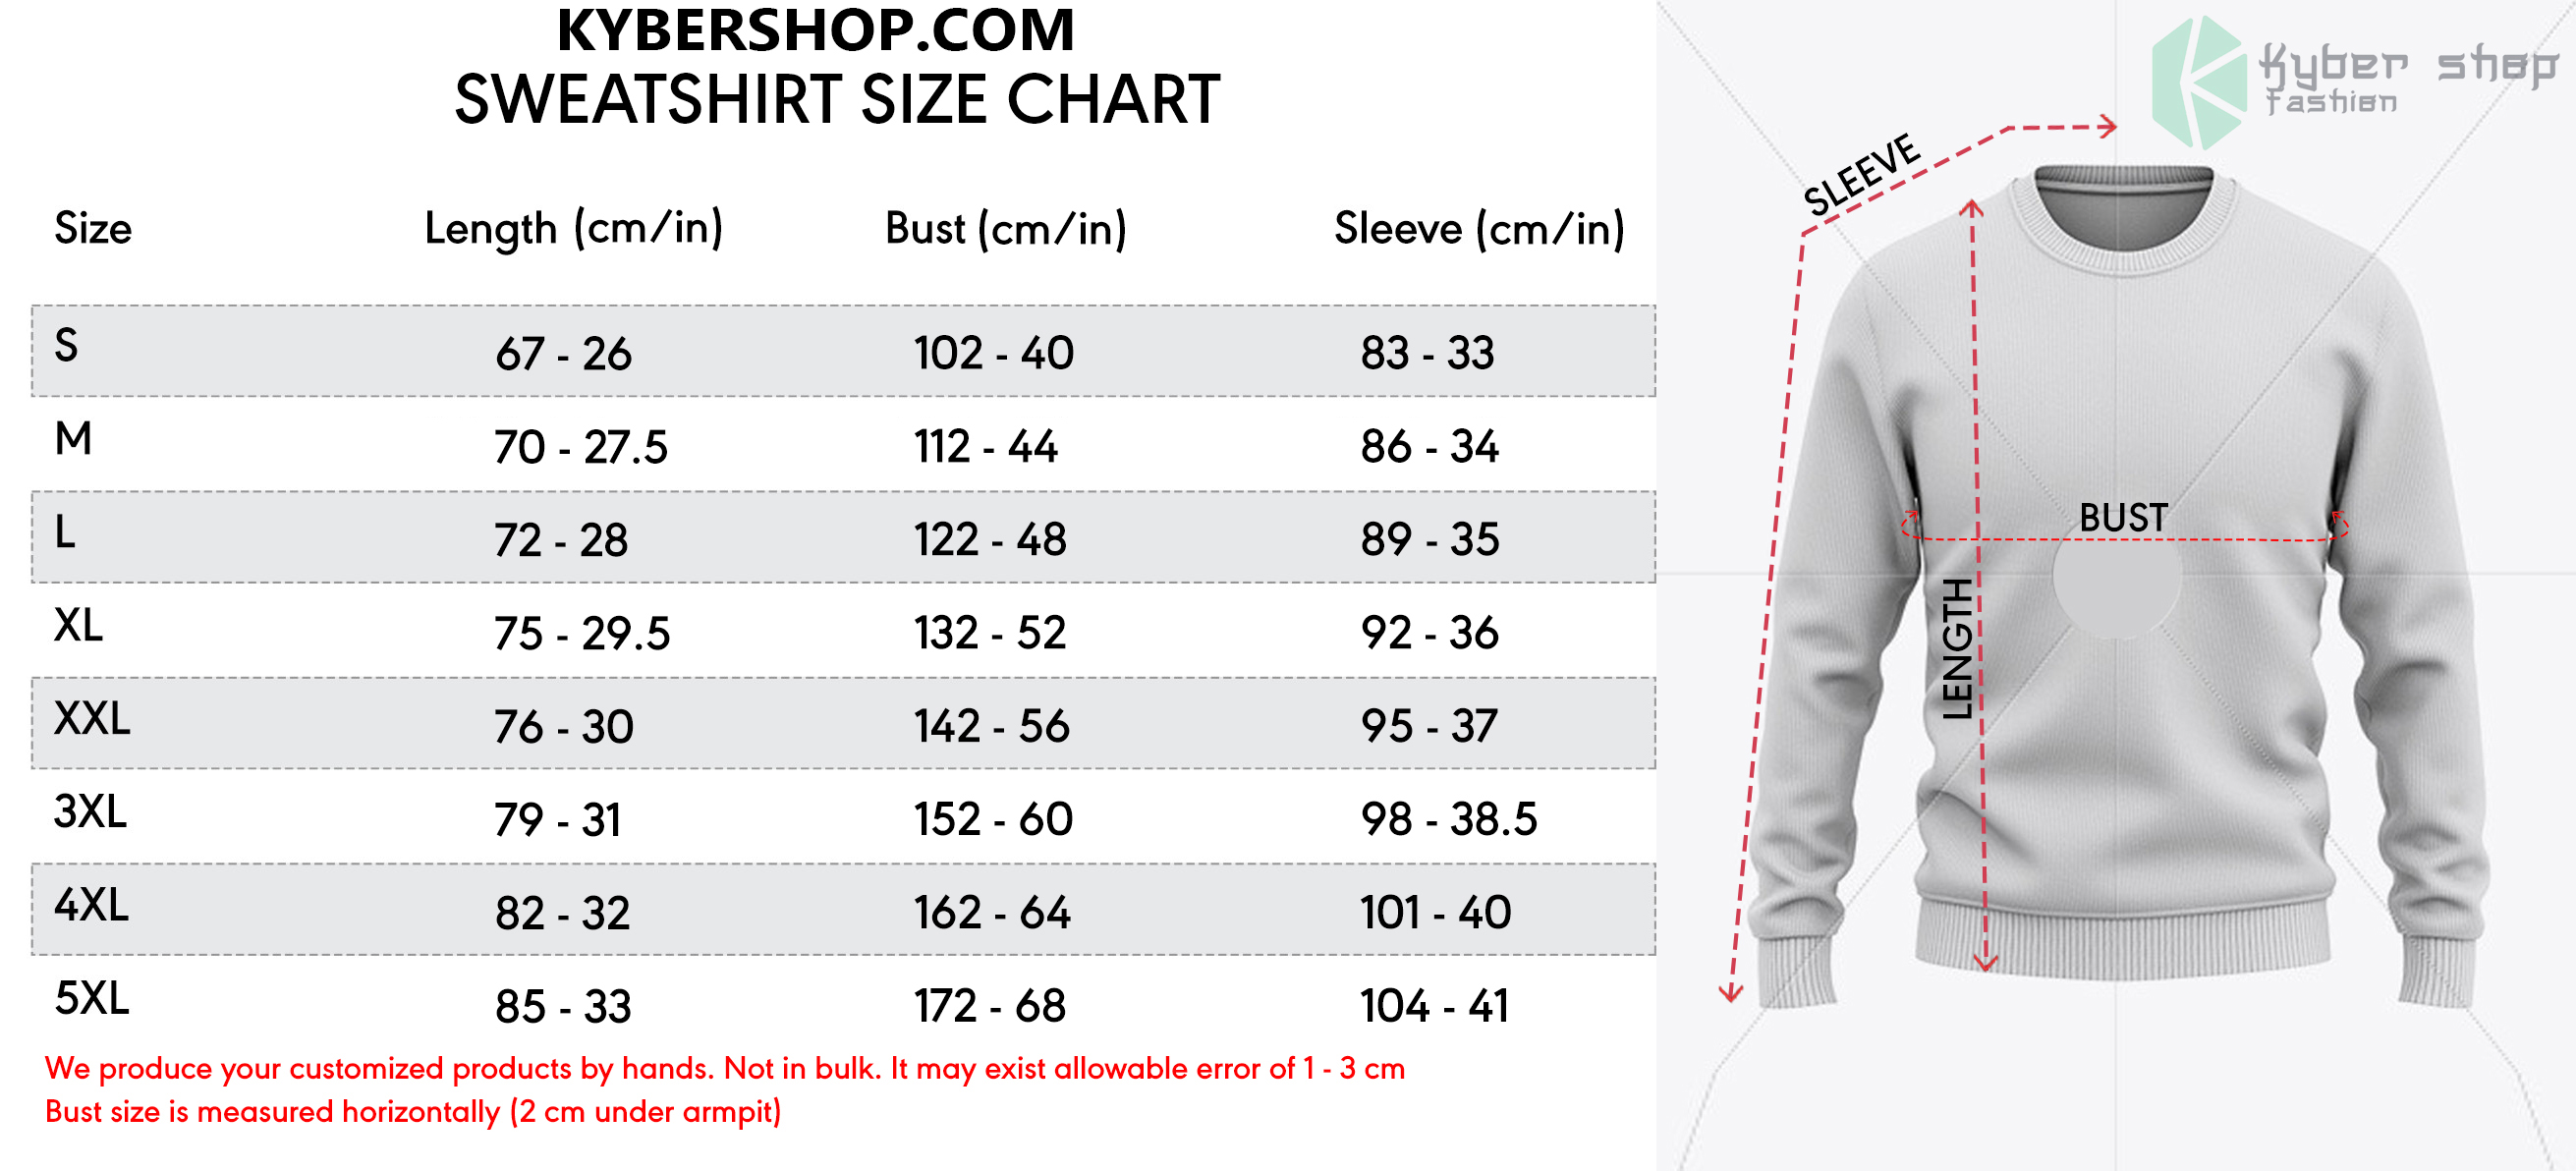 Sweatshirt Size Chart Kybershop